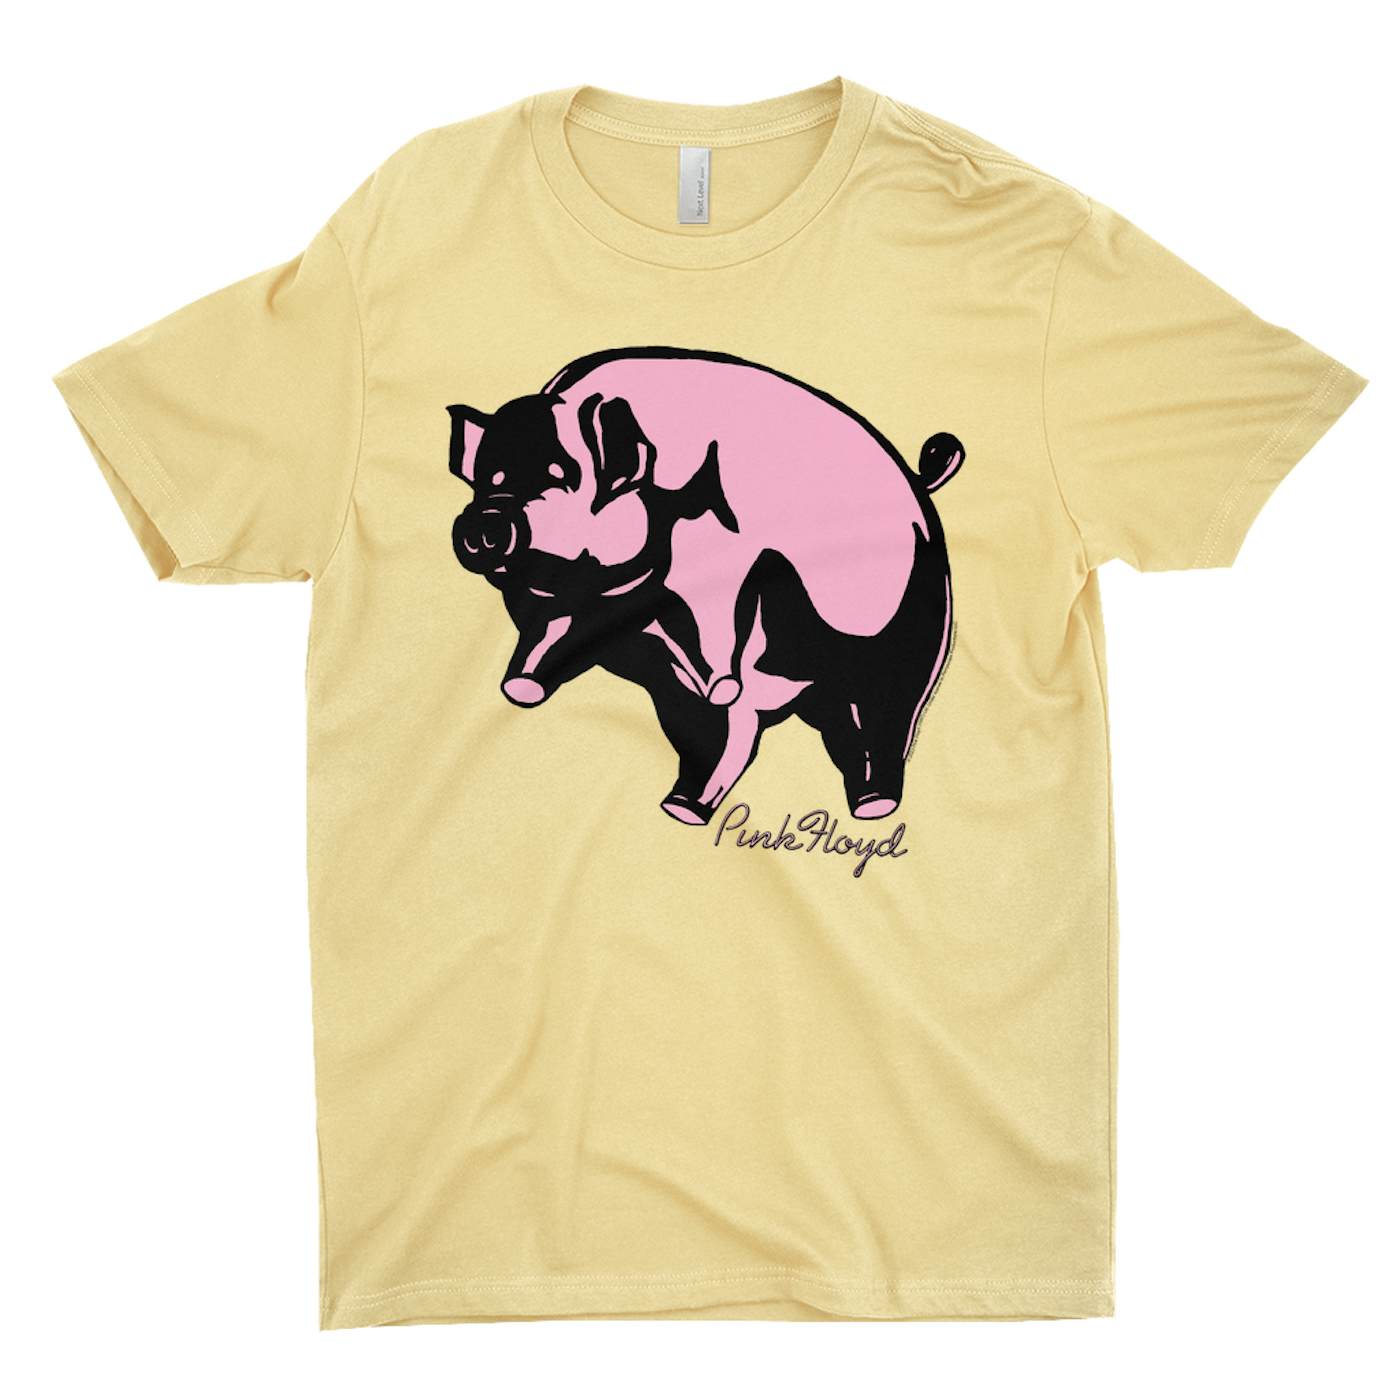 Pink Floyd T-Shirt | Classic Flying Pig Album Art Pink Floyd Shirt